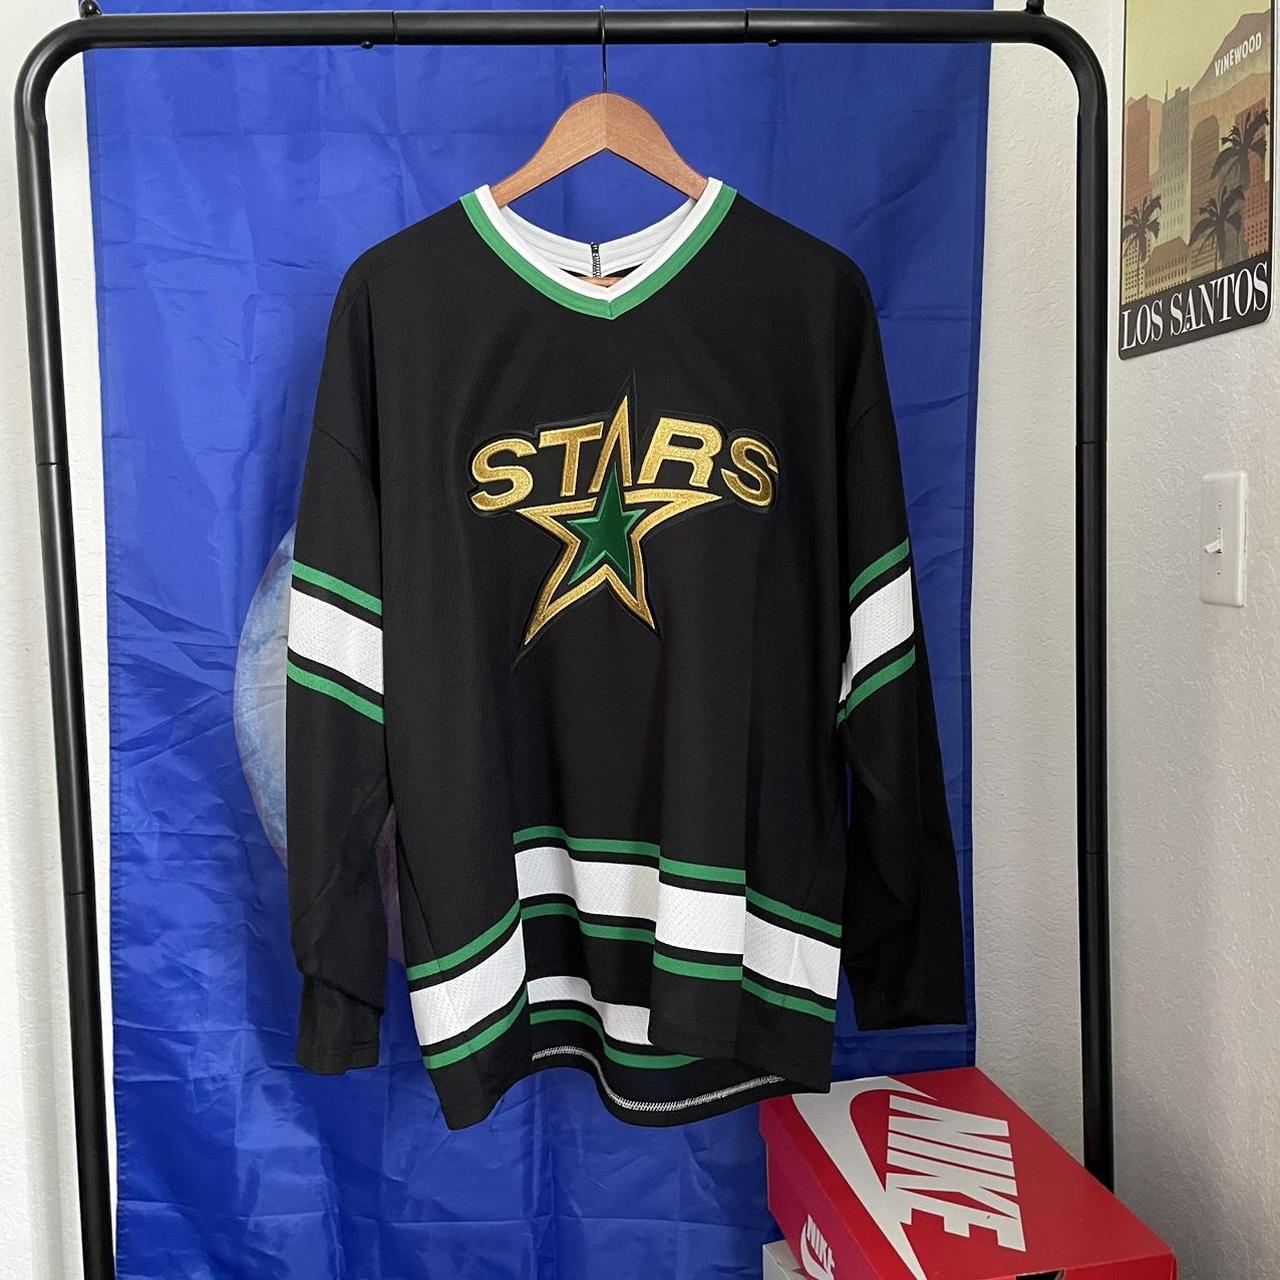 Vintage NHL Dallas Stars Hockey Jersey